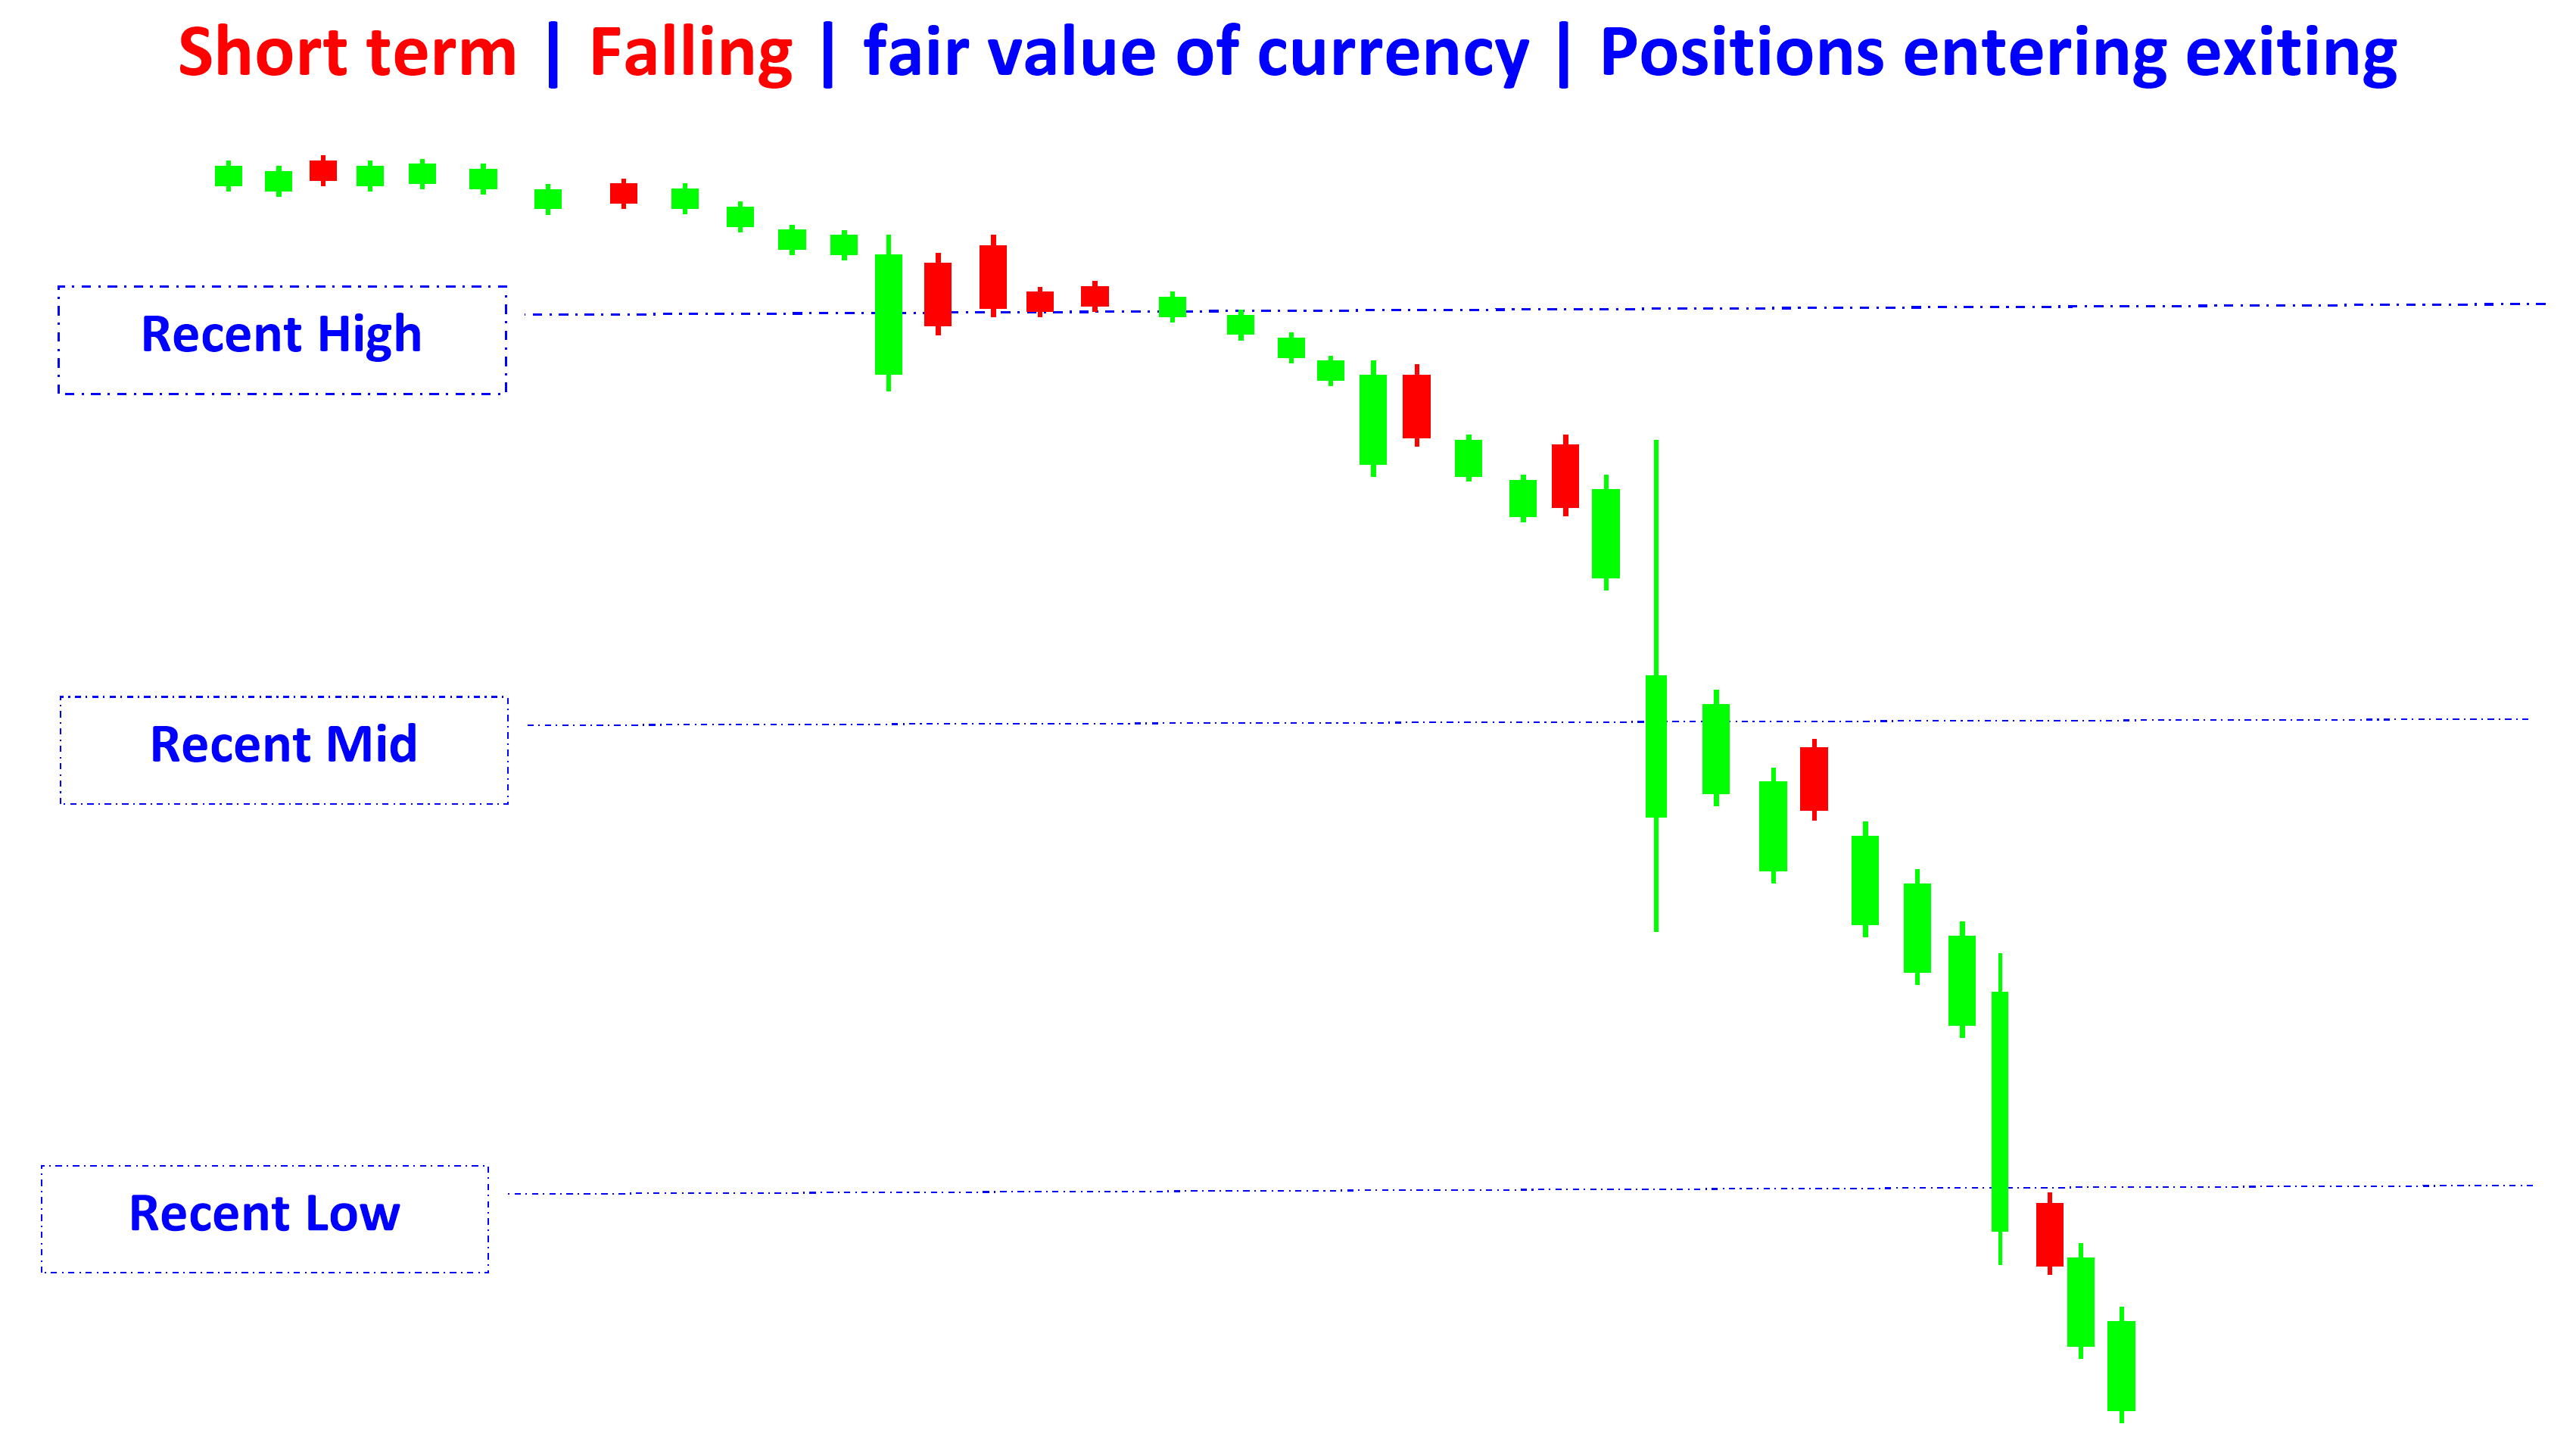 fair value indicators of currency in short terms falling en